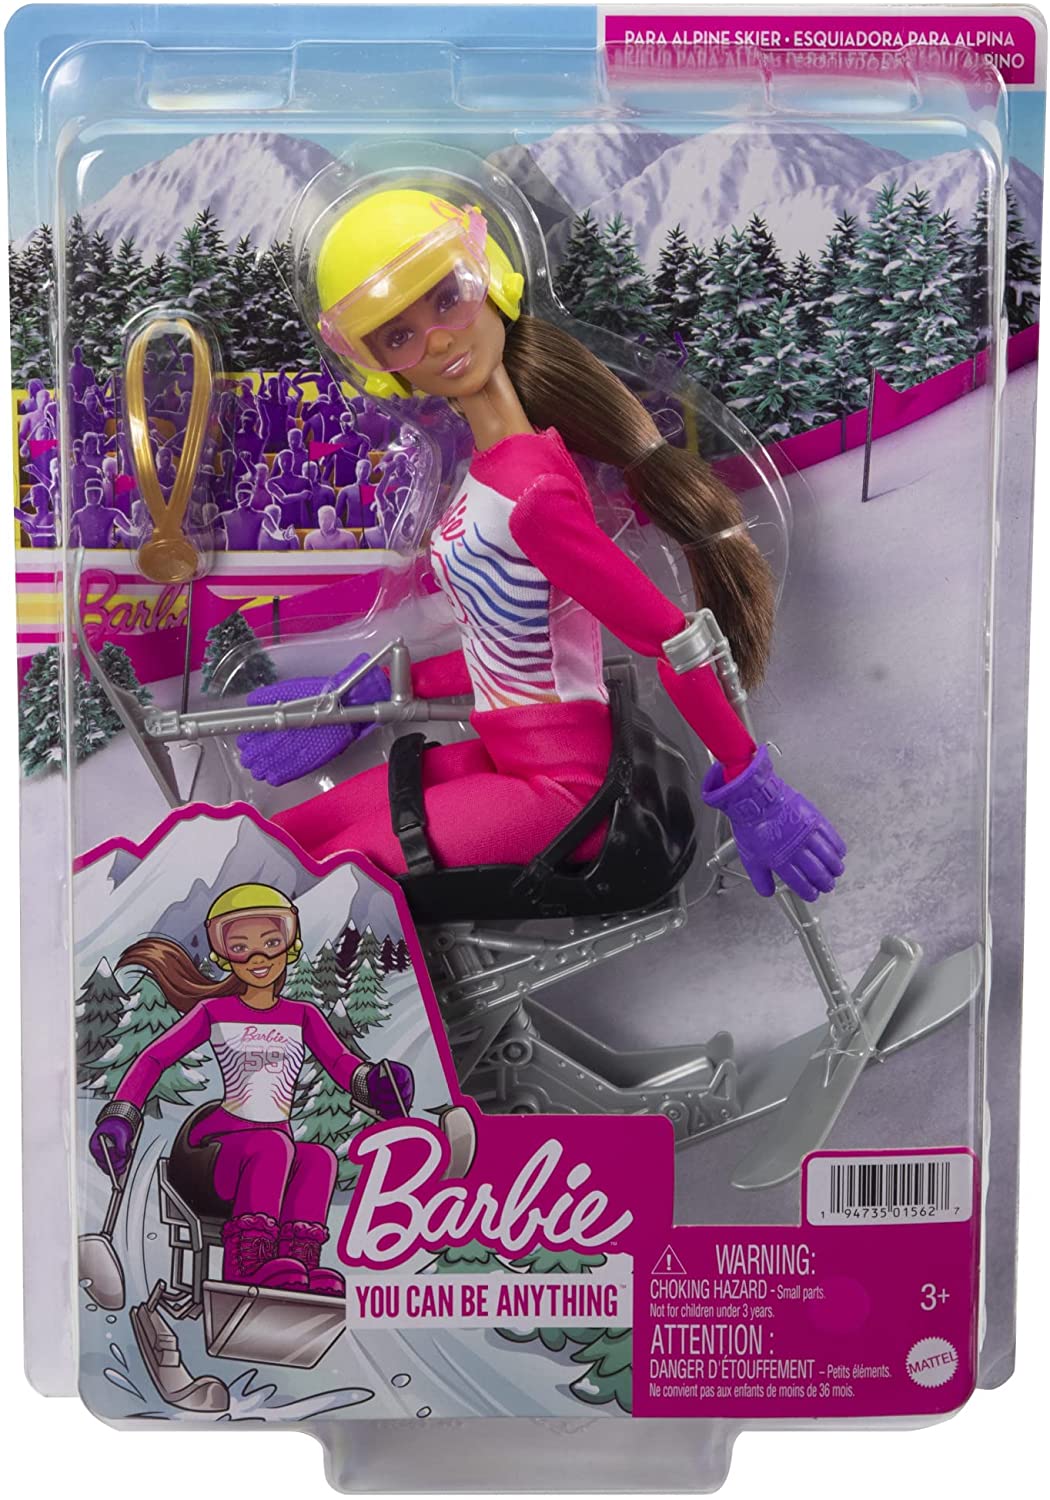 Barbie Paraskifahrerein